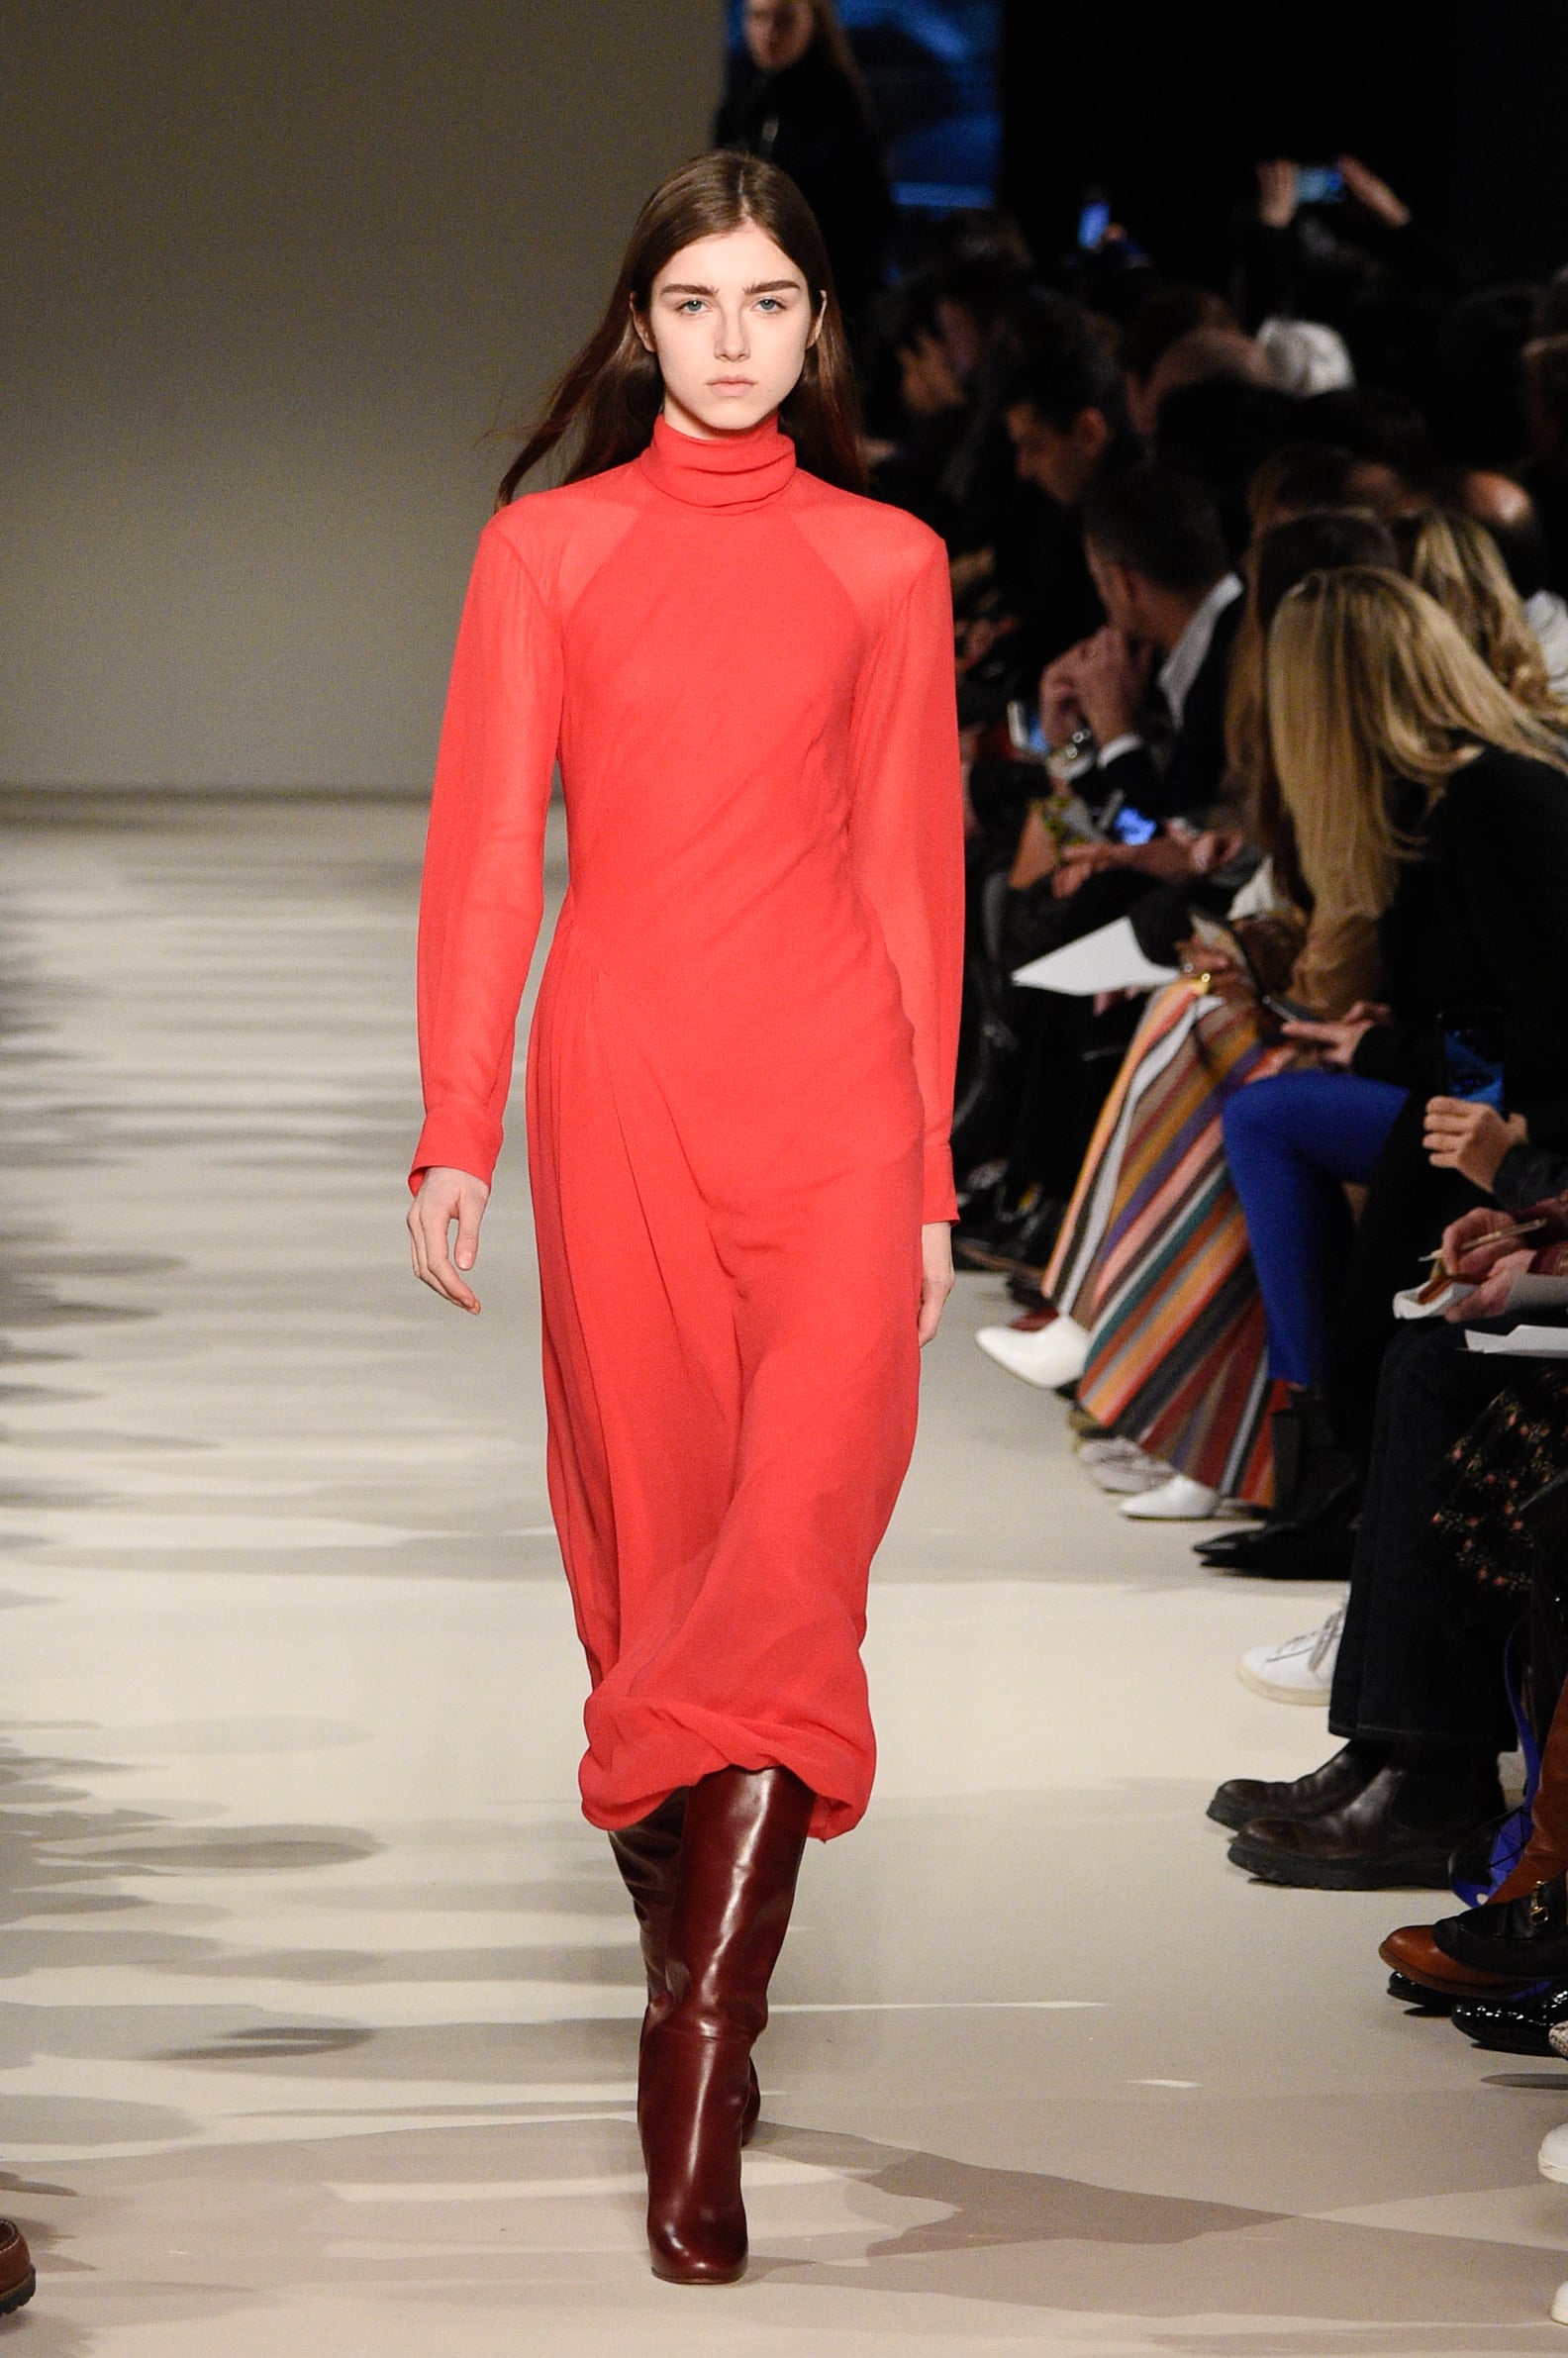 Red Carpet Dresses at New York Fashion Week Fall 2017 | POPSUGAR Fashion